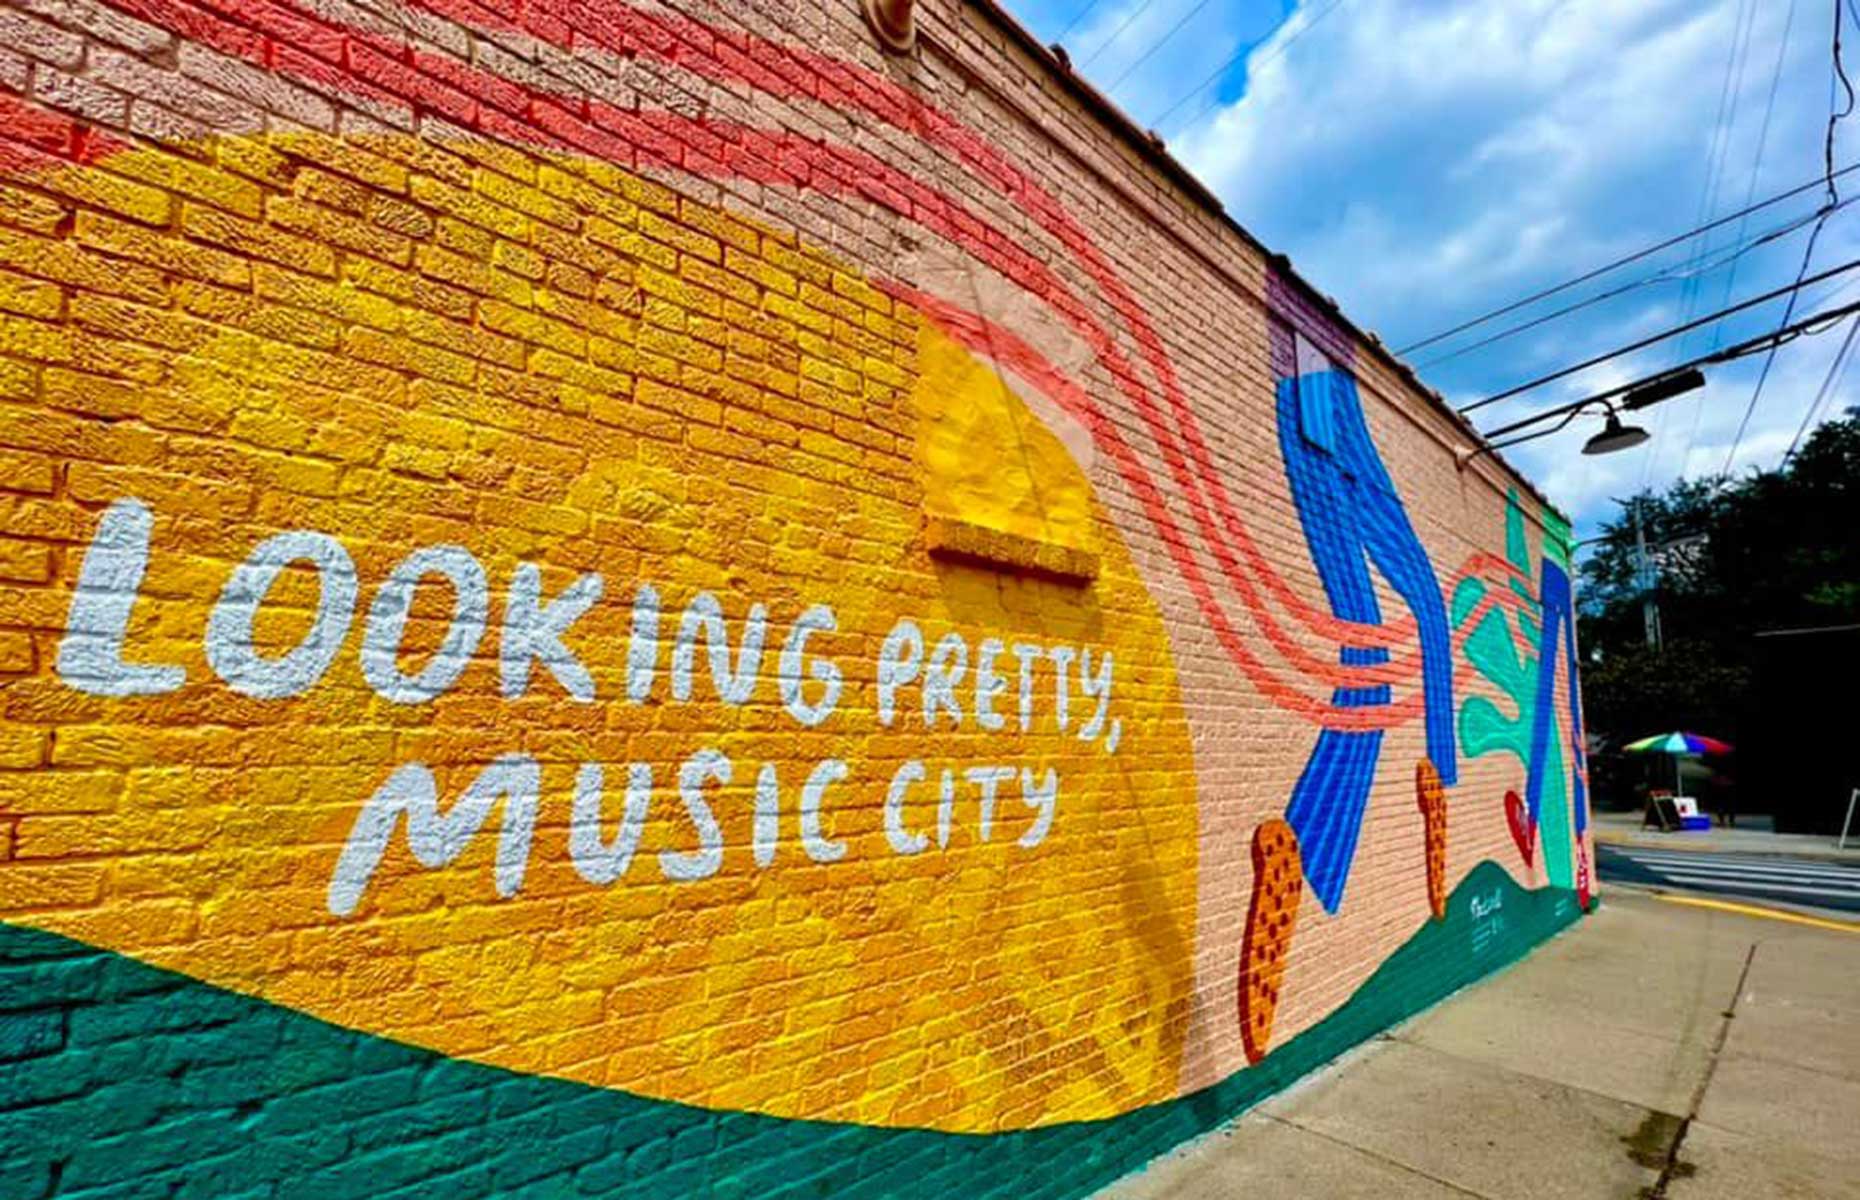 Nashville art mural, 12South (Image credit: Aimee White)